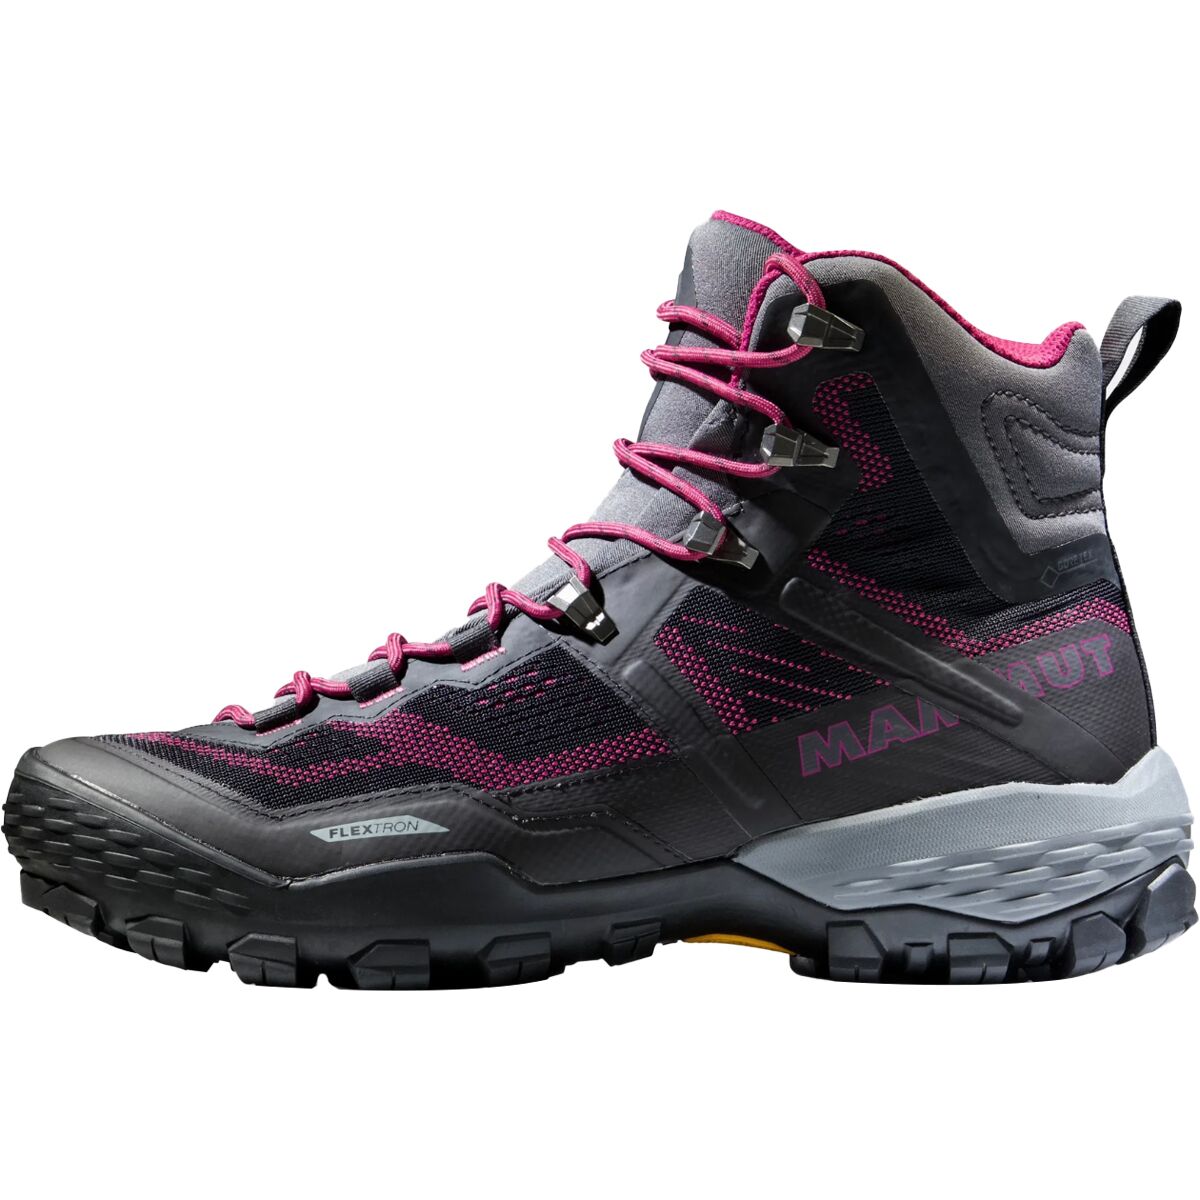 Ducan High GTX Hiking Boot - Women